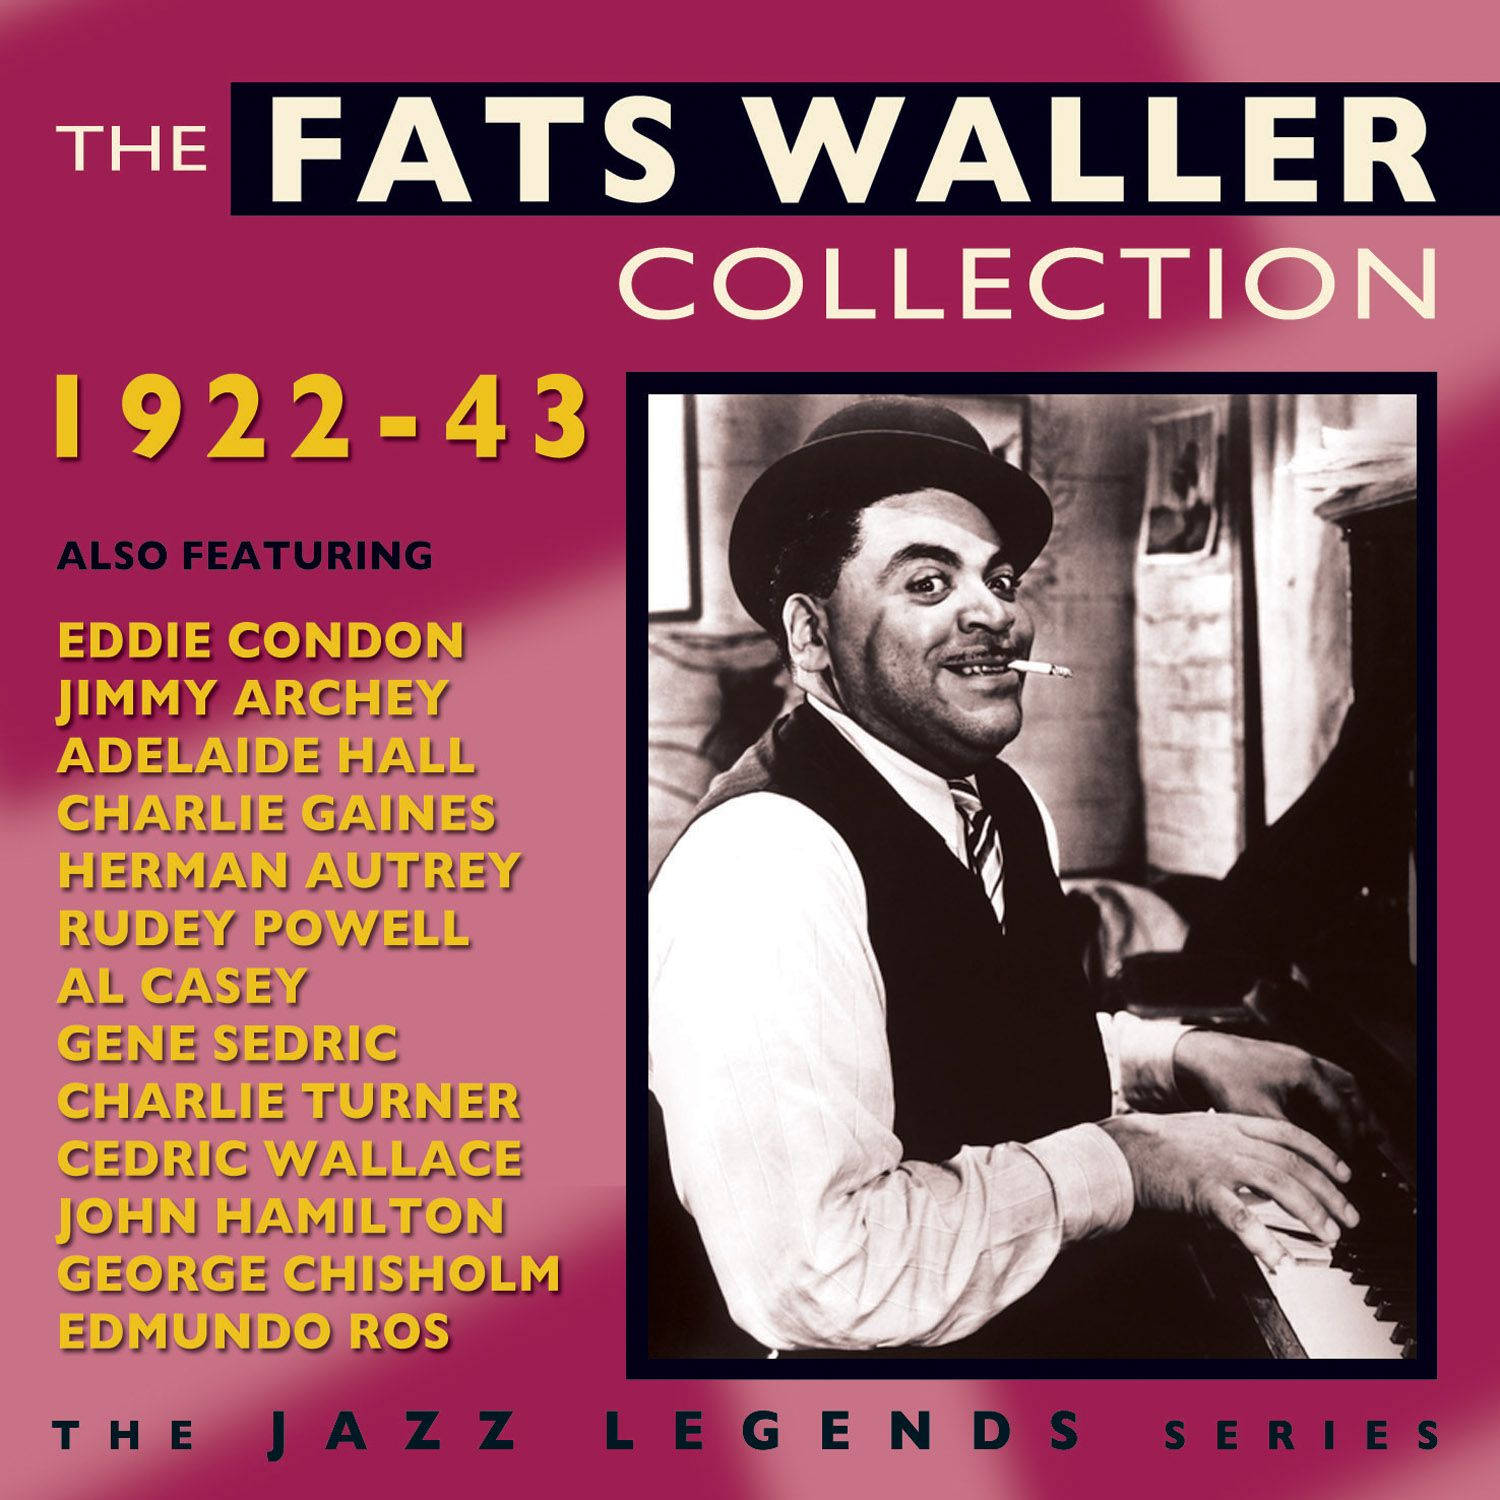 The Jazz Legends Series Fats Waller Collection Wallpaper